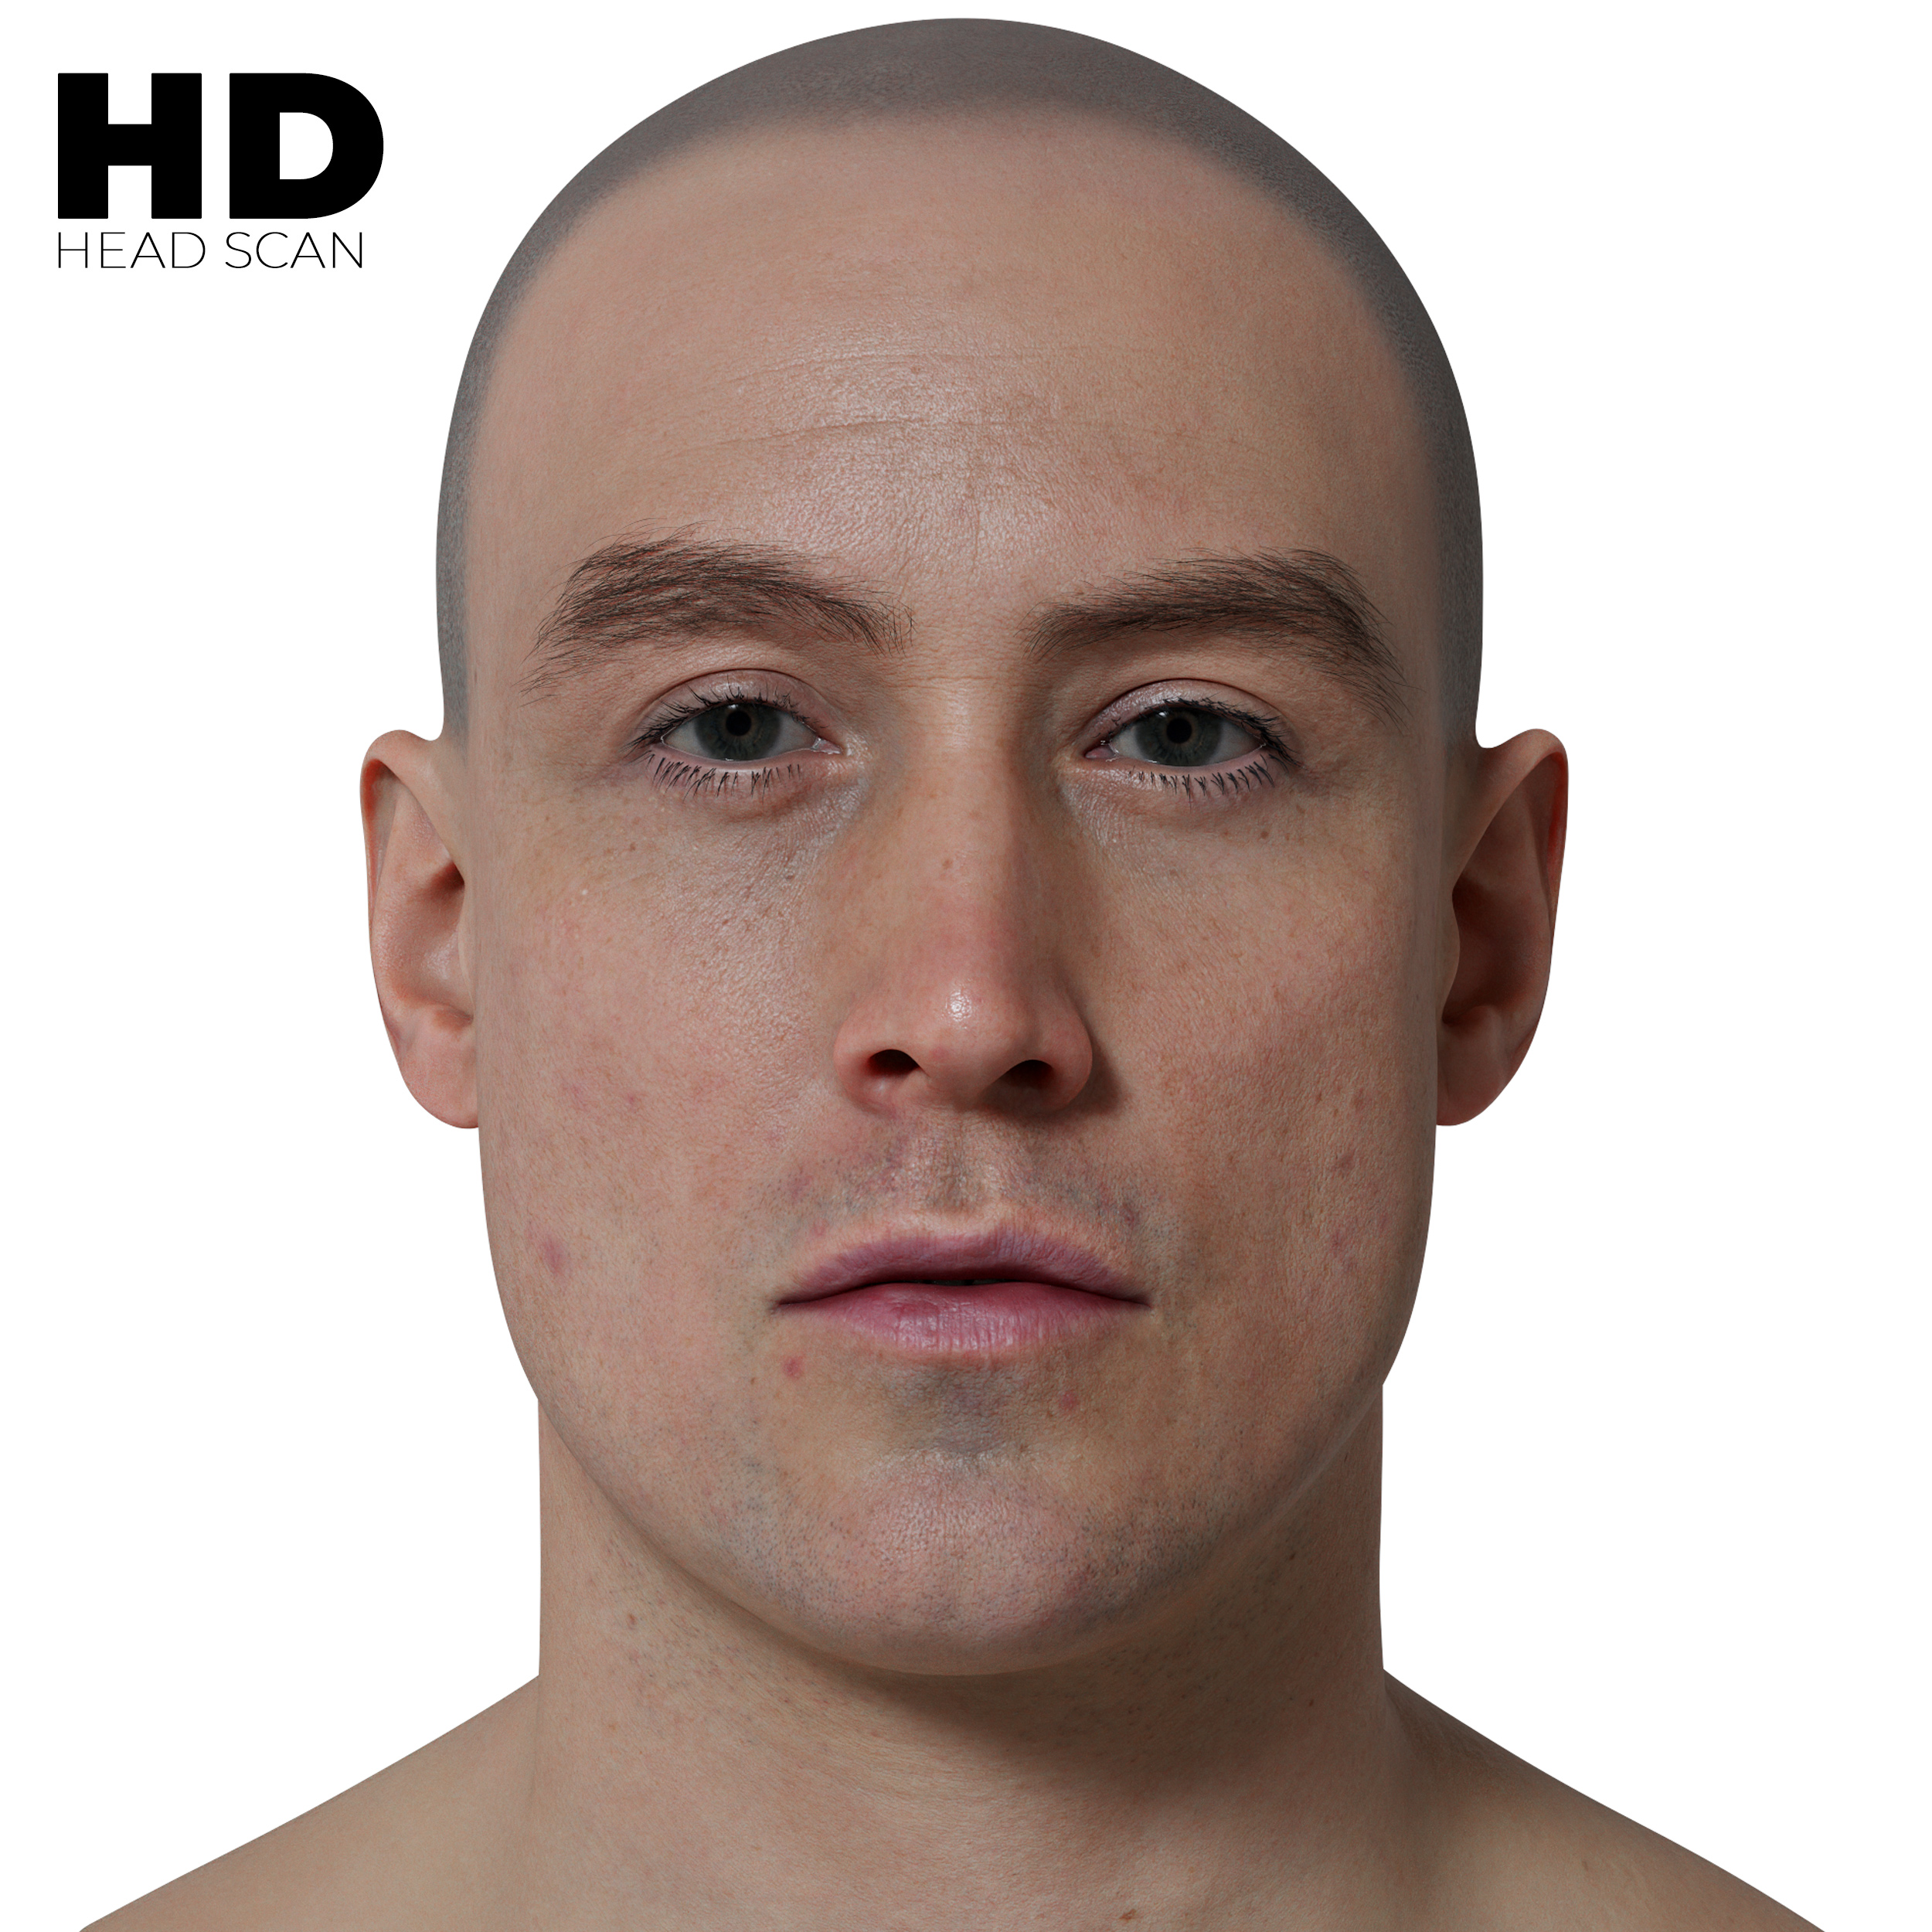 1518 Studios on X: Check out our 3D head sculpt  # head #face #man #handsome #realmen #skin #highpoly #photoreal #realistic # sculpt #scar  / X